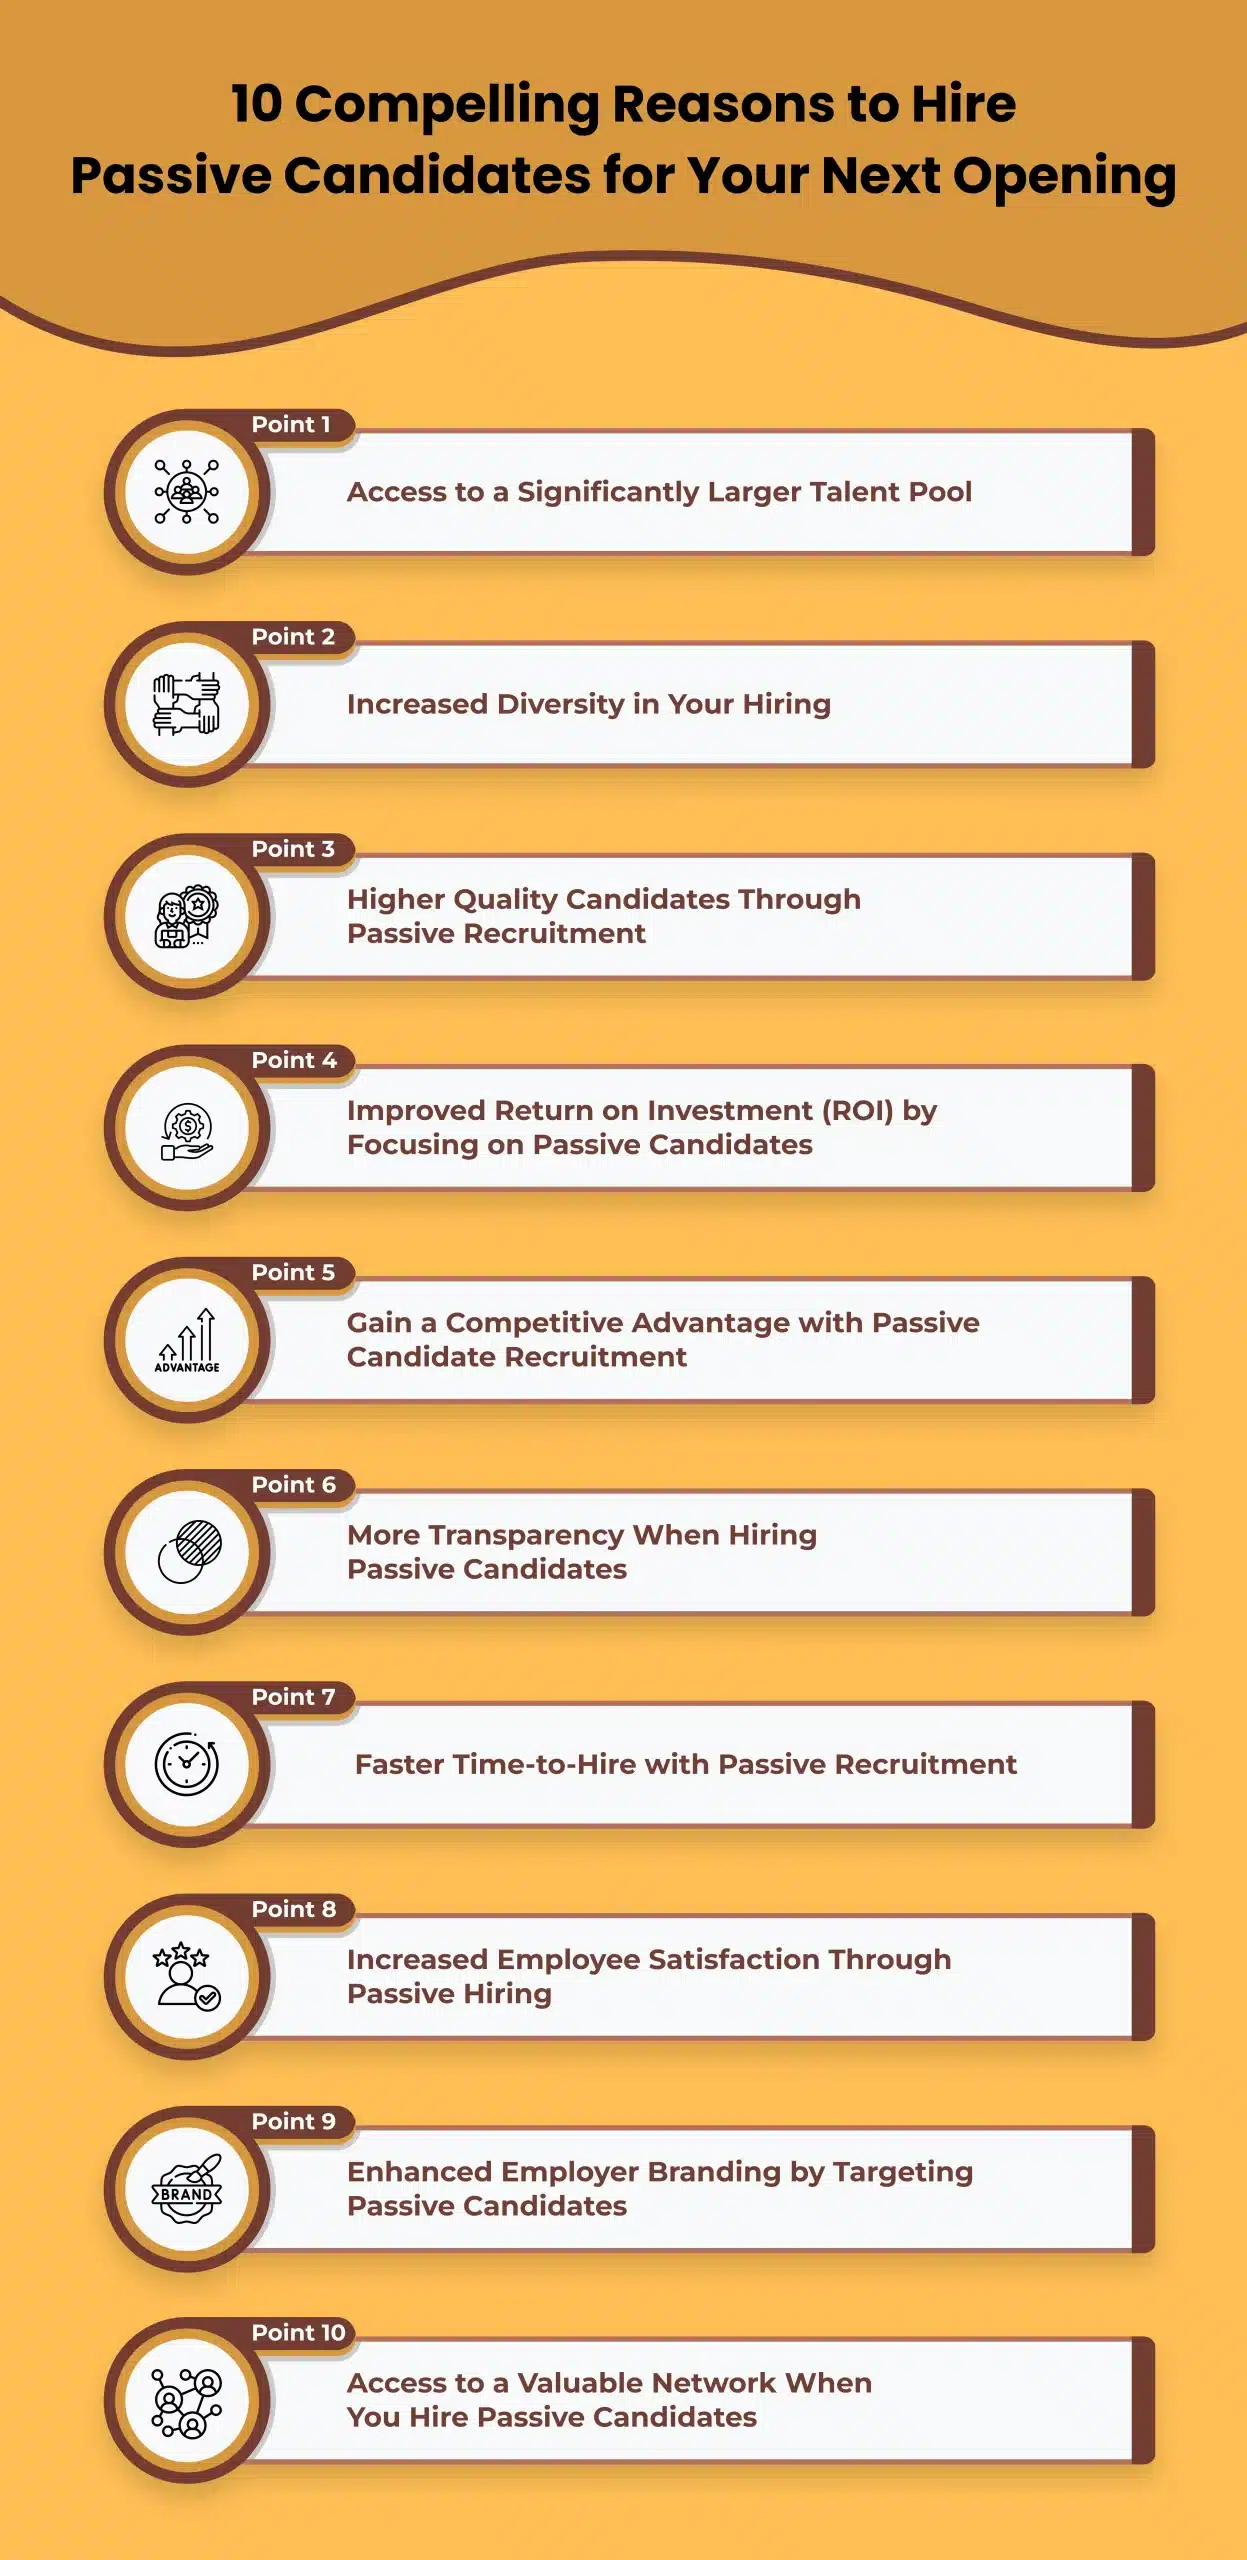 Top 10 Benefits of Hiring Passive Candidates